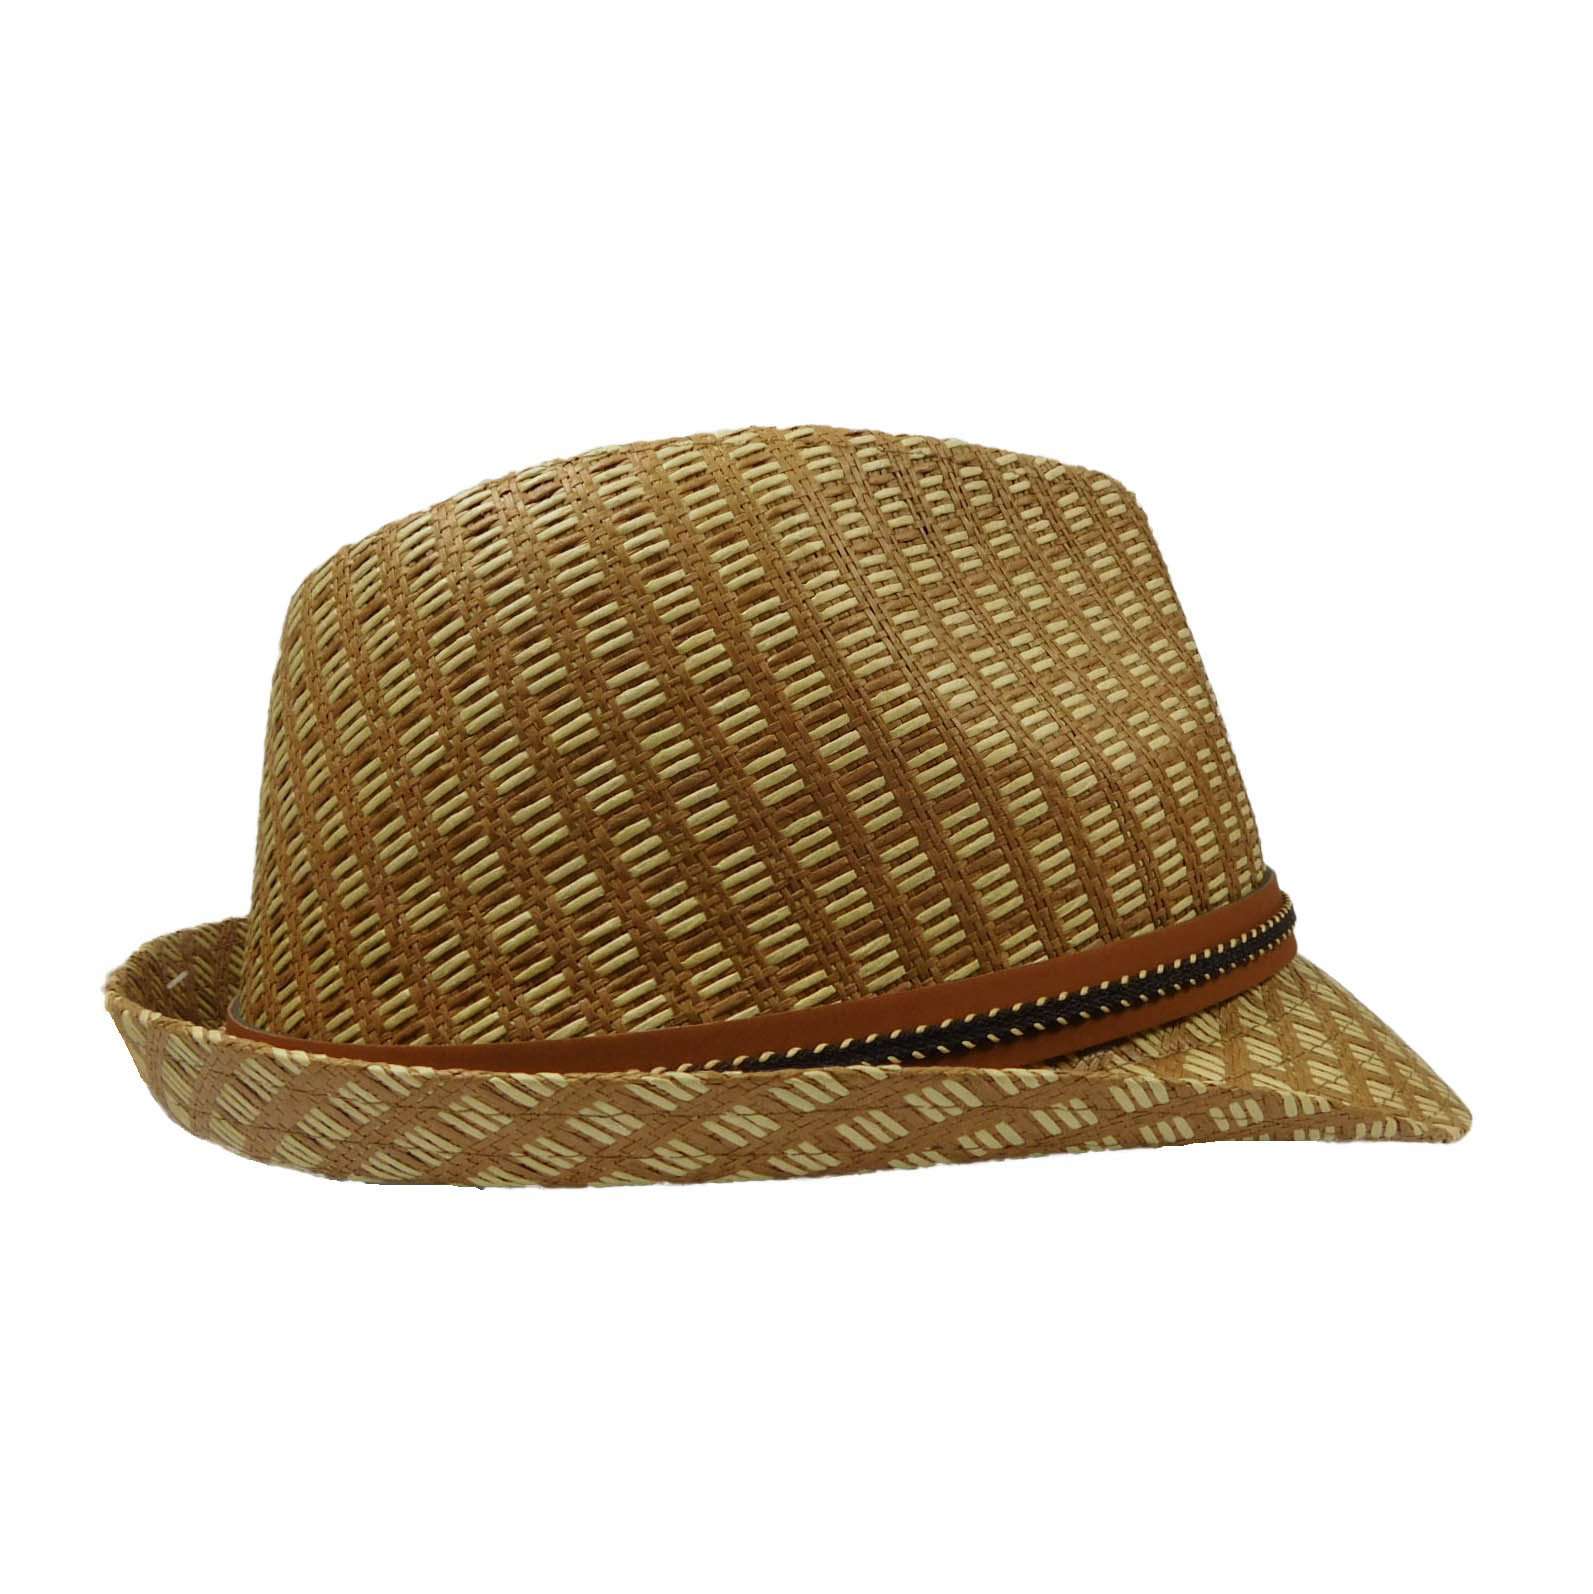 Checkered Summer Fedora Hat Fedora Hat Mentone Beach    